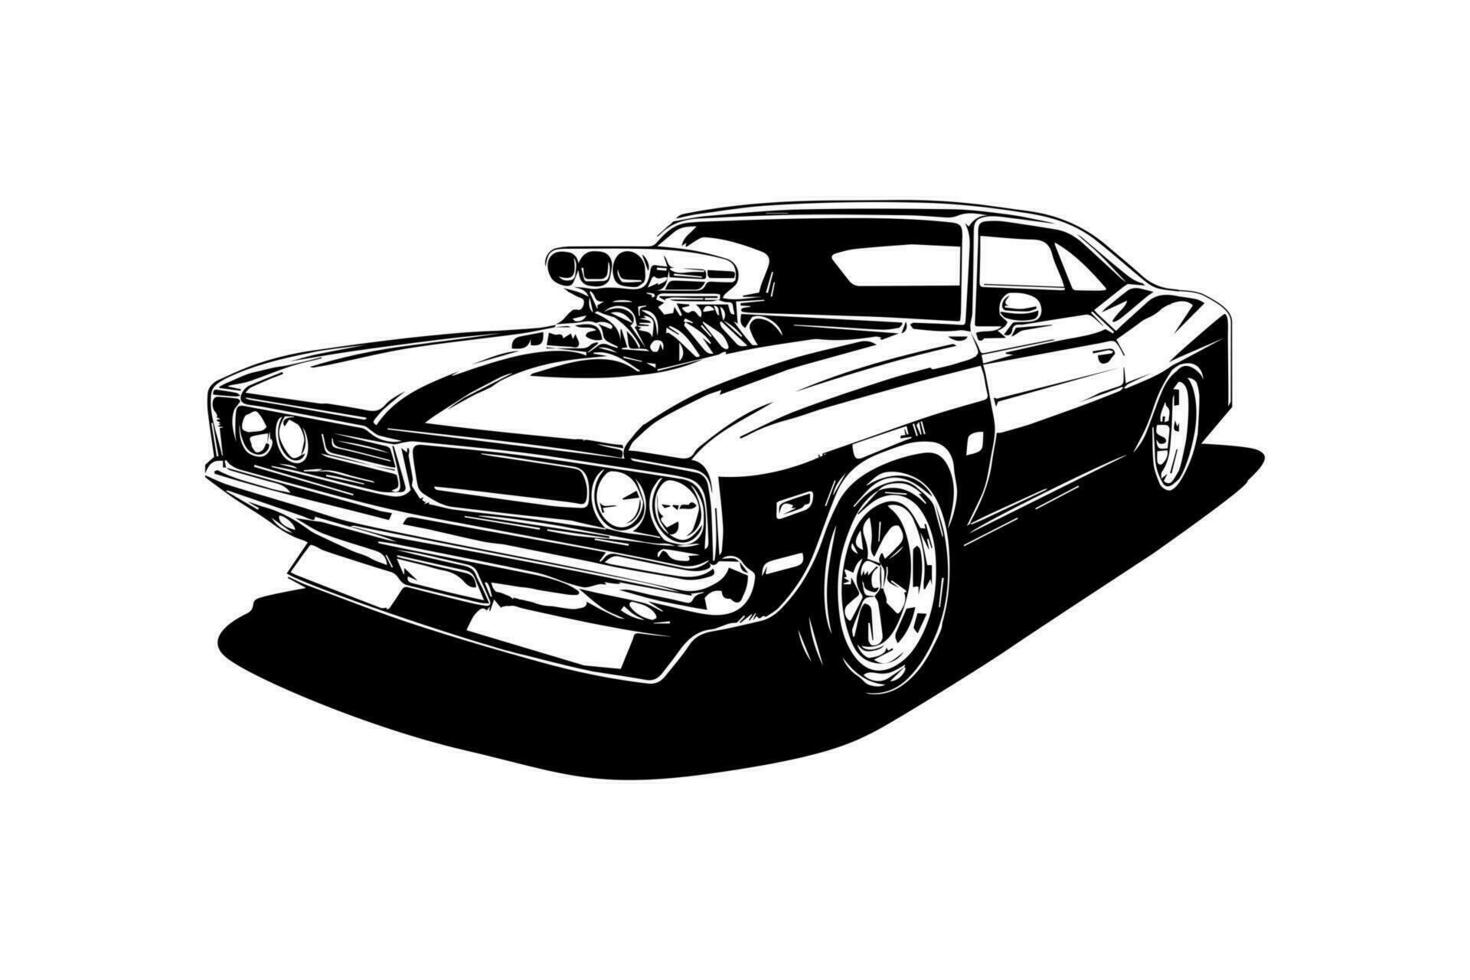 classic vintage retro car design vector black and white illustration